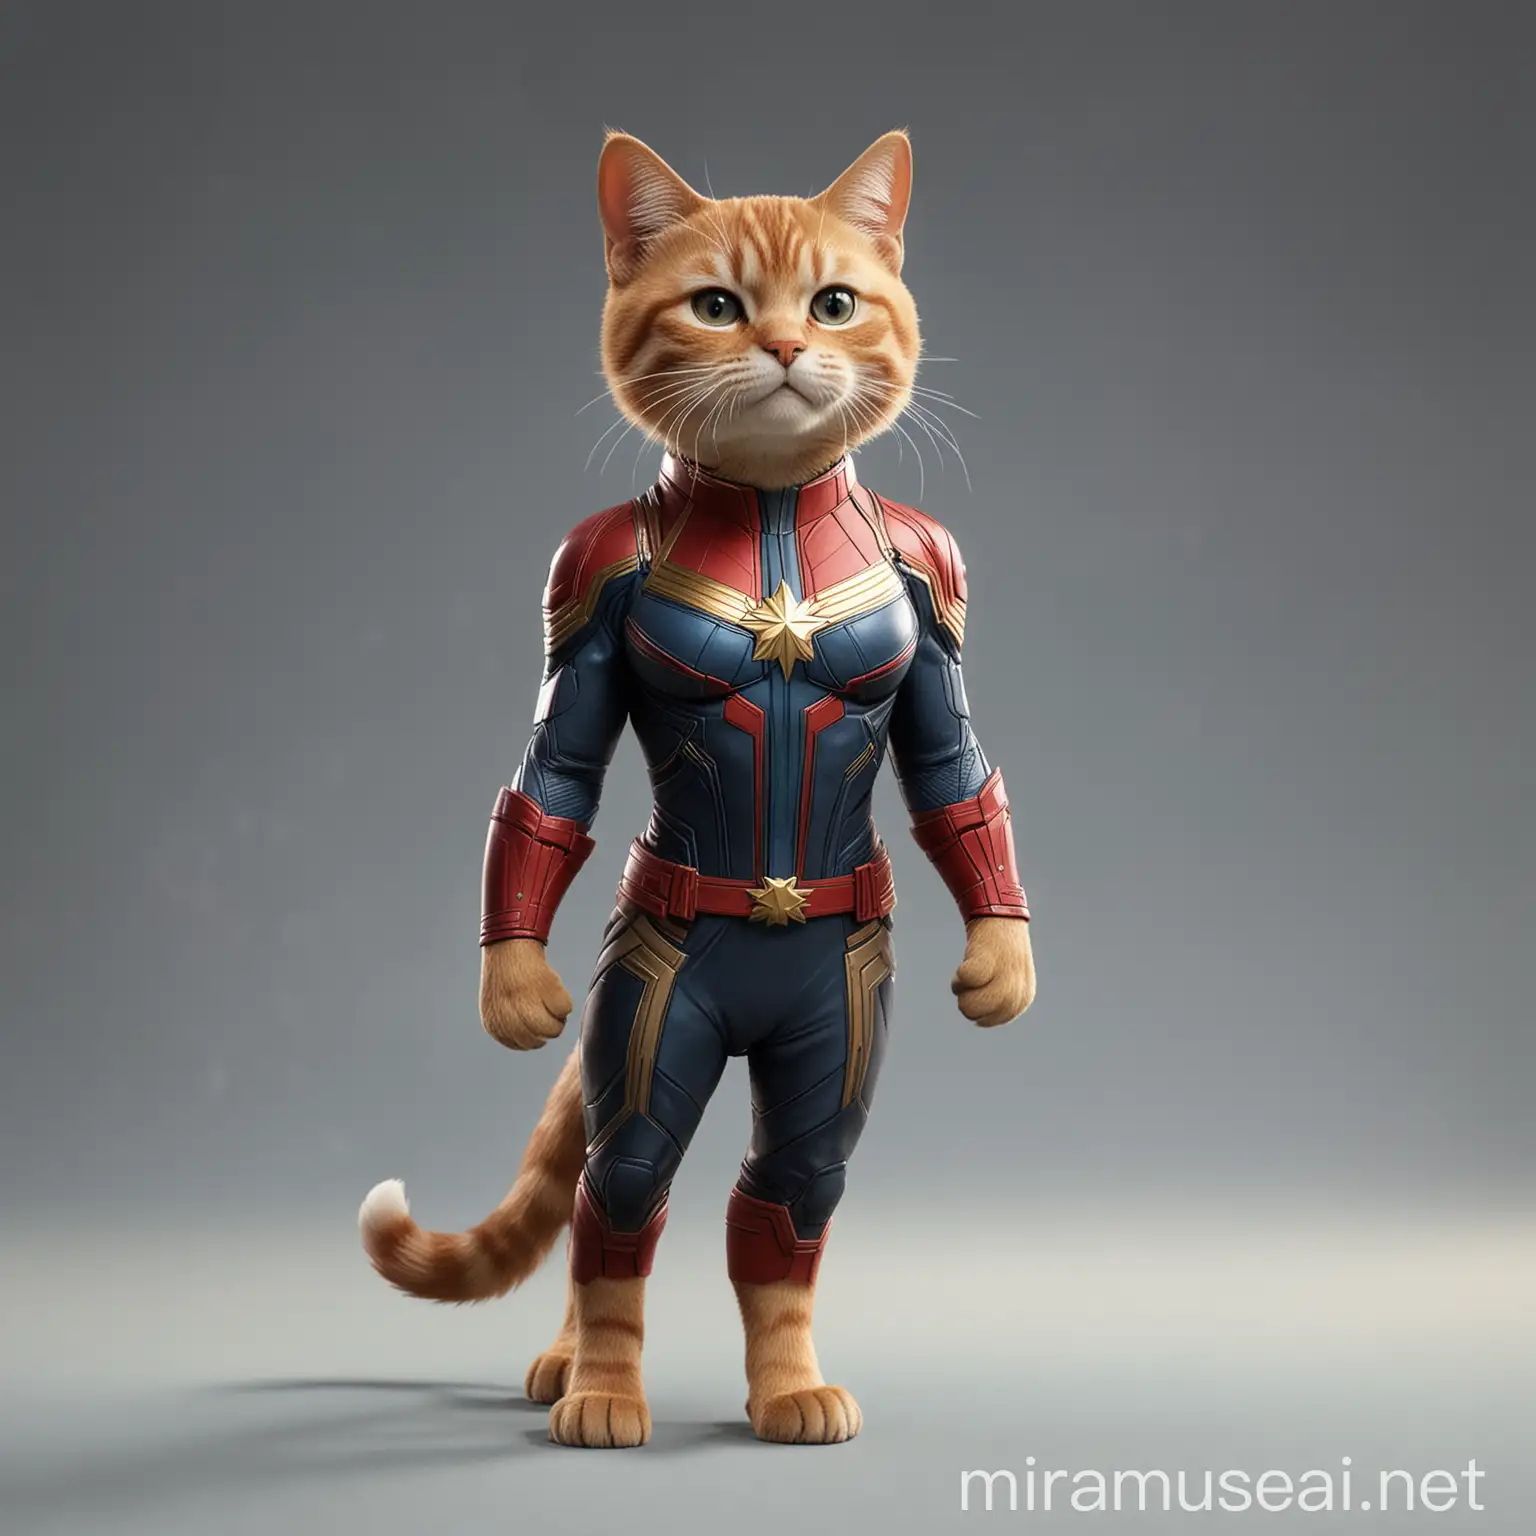 Majestic Full Body Cat Standing in Captain Marvel Style